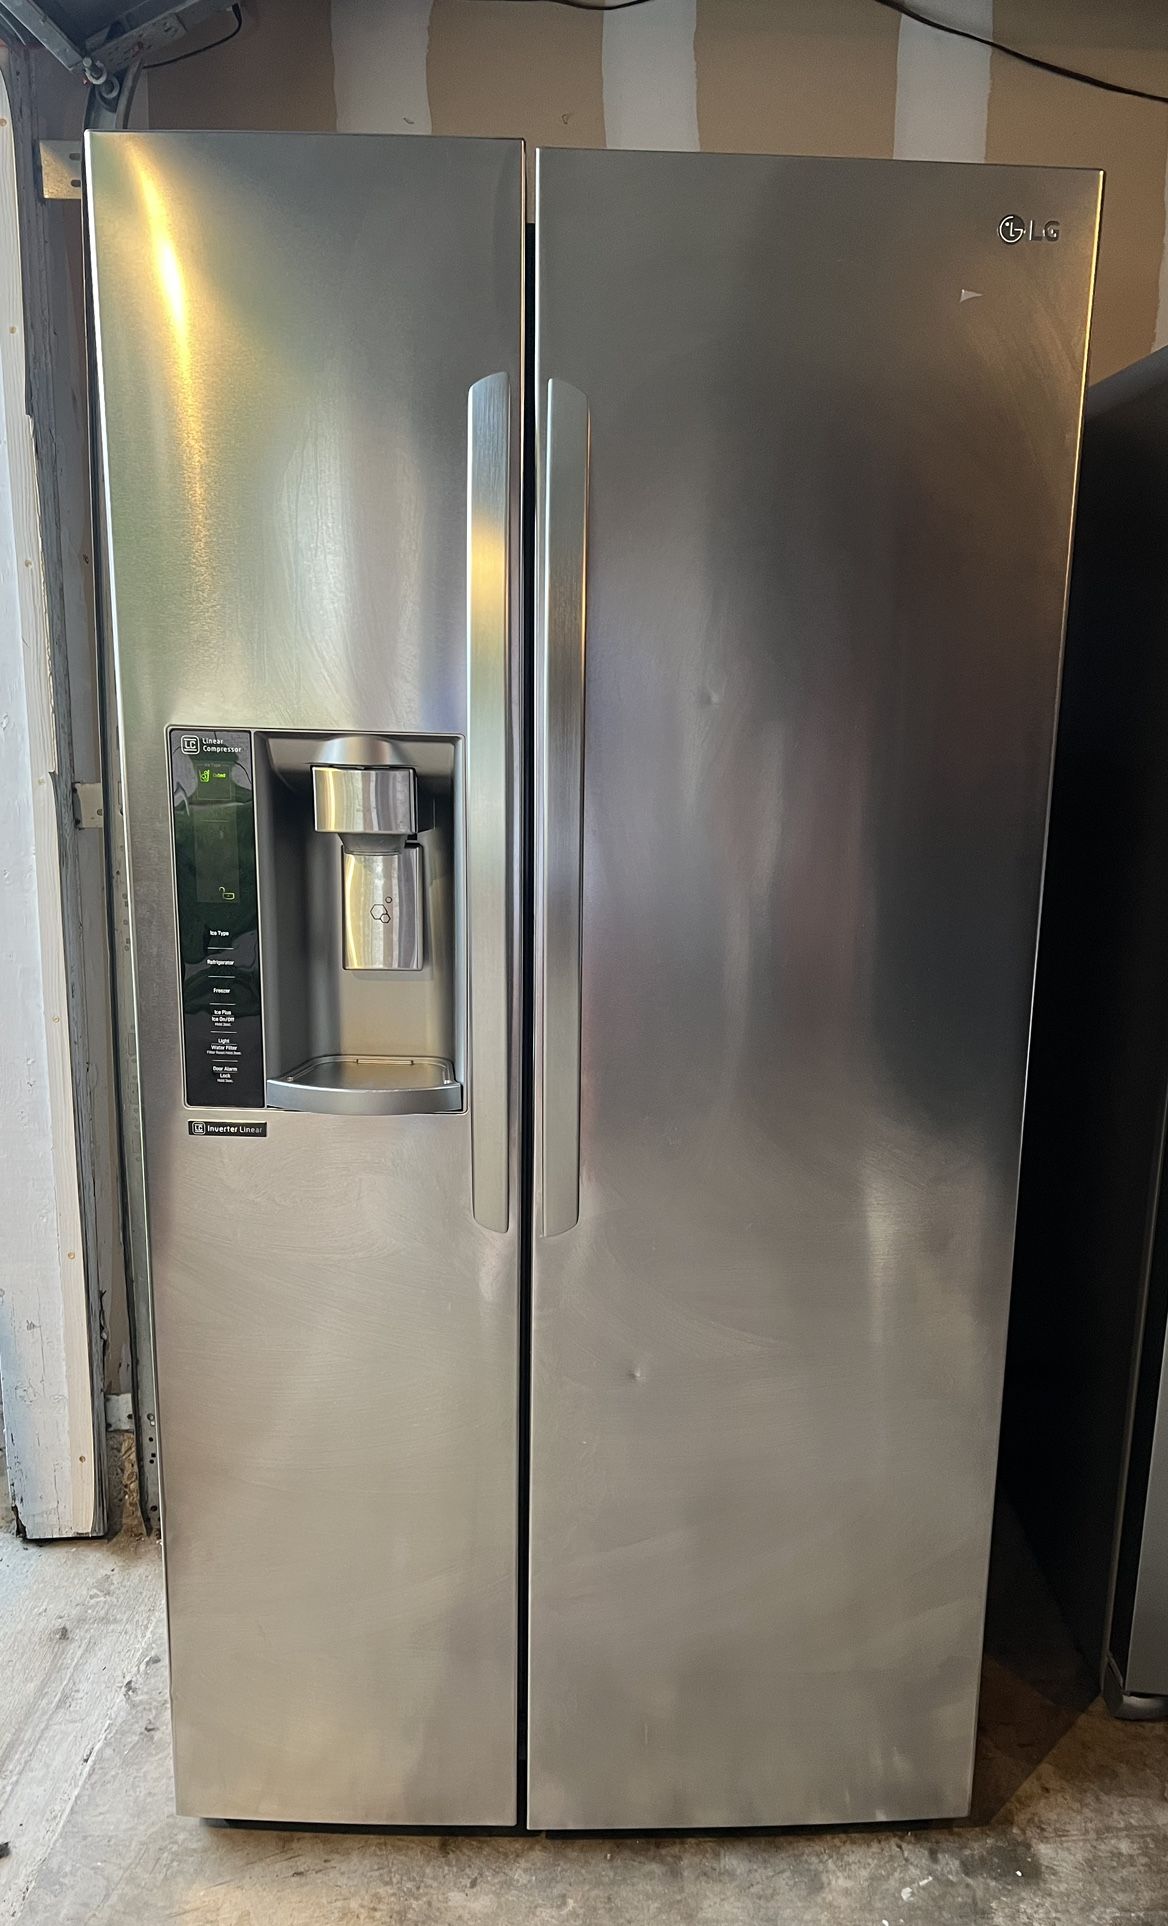 LG Side-By-Side Refrigerator - Like New